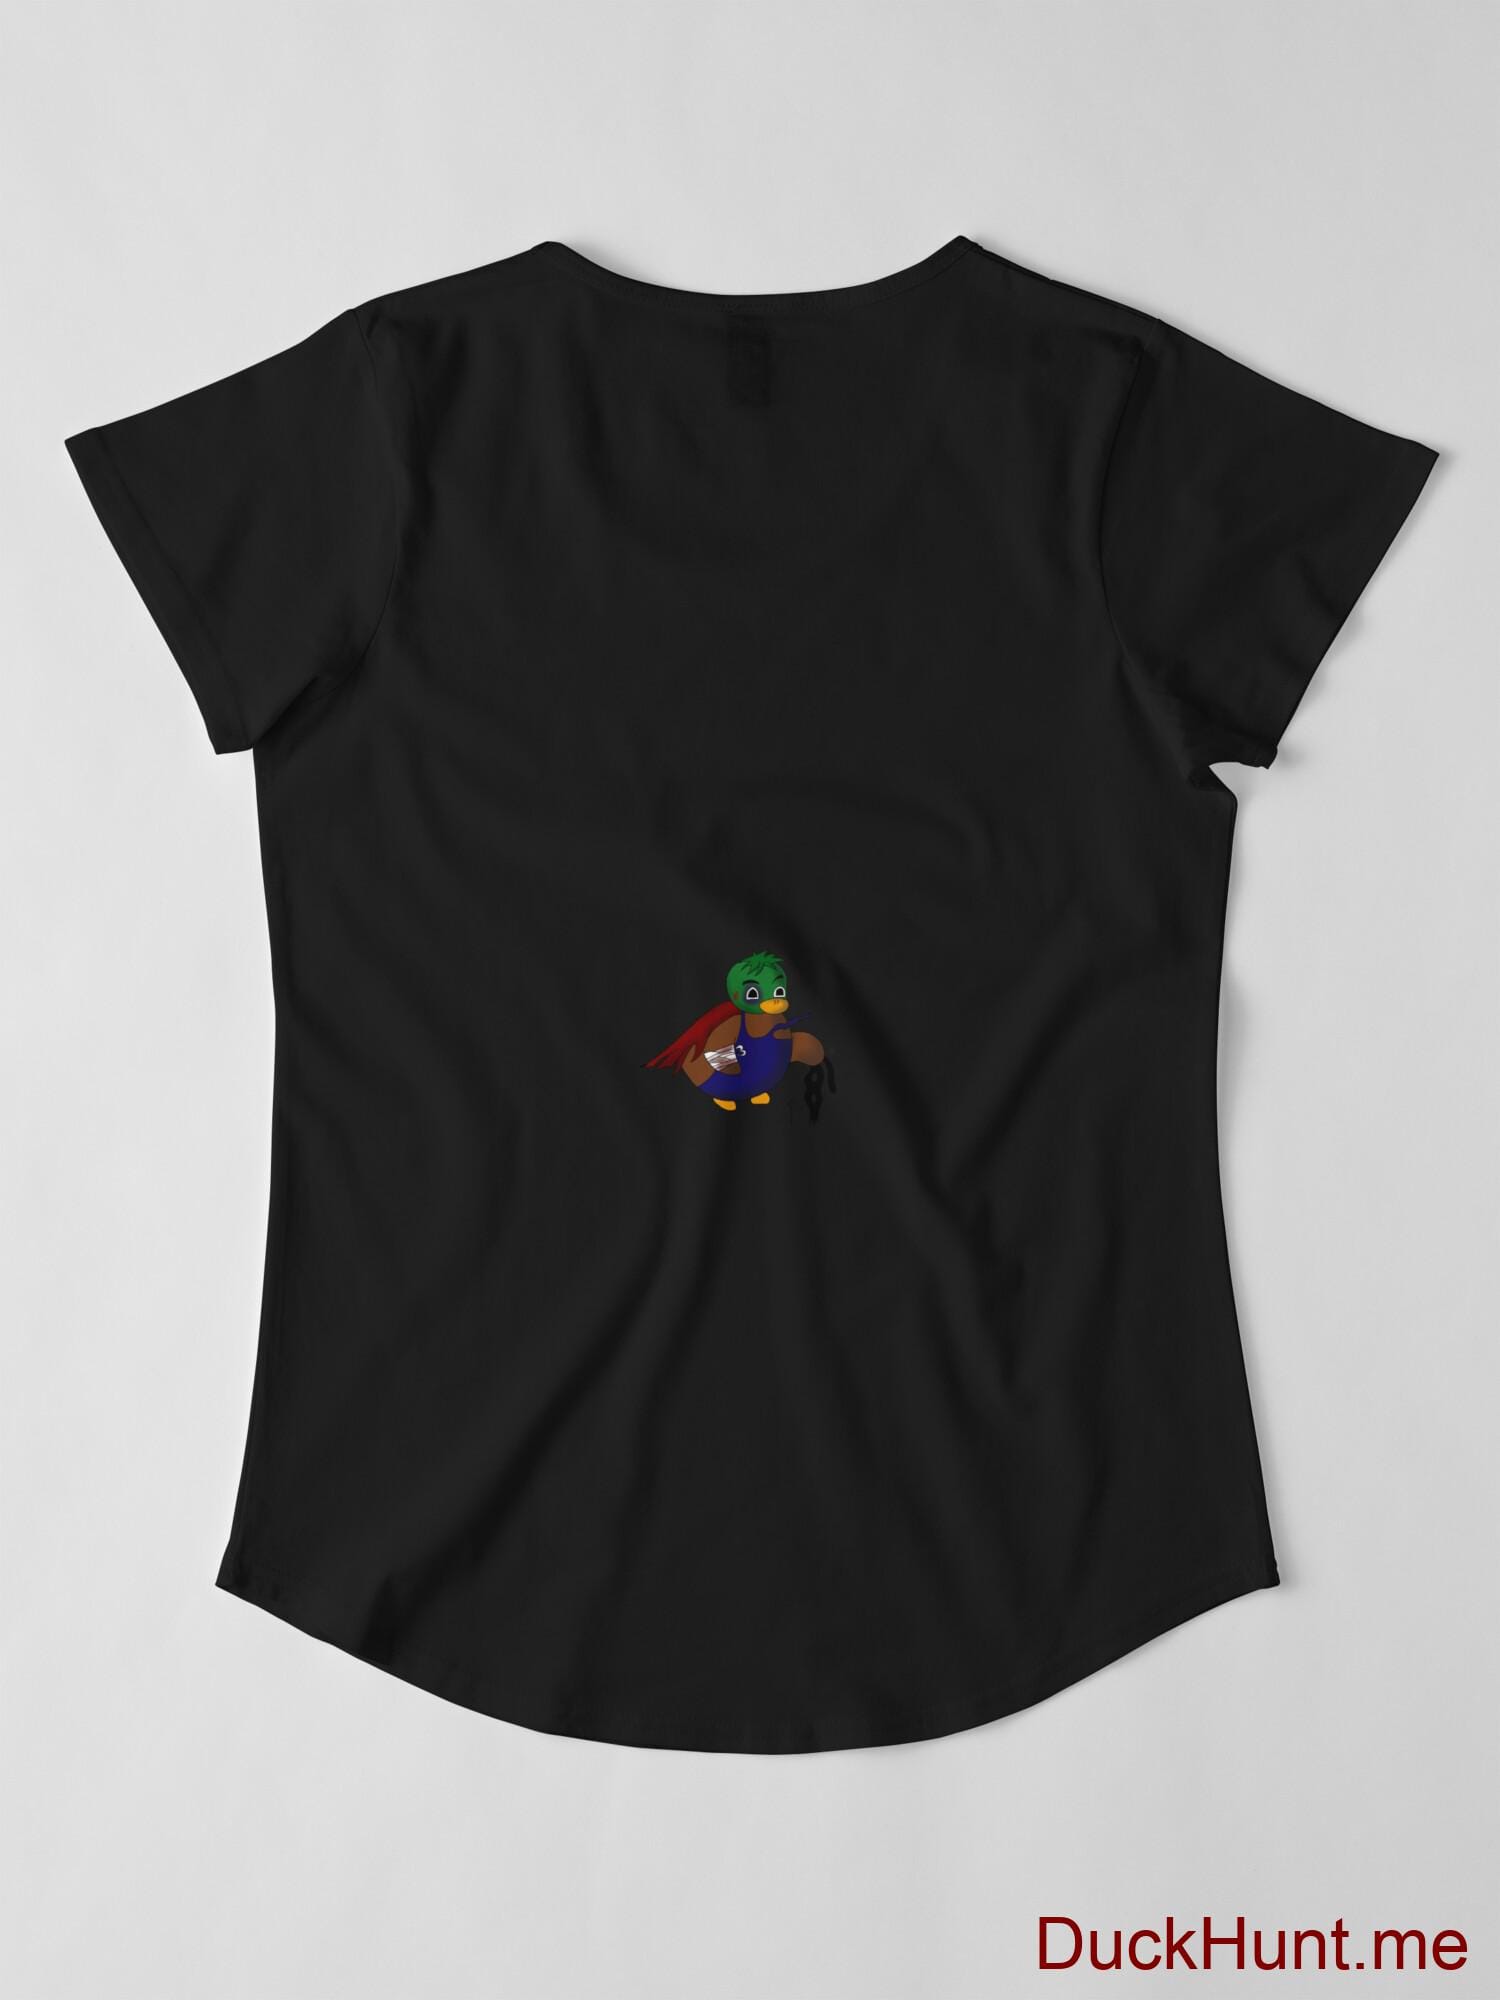 Dead DuckHunt Boss (smokeless) Black Premium Scoop T-Shirt (Back printed) alternative image 2